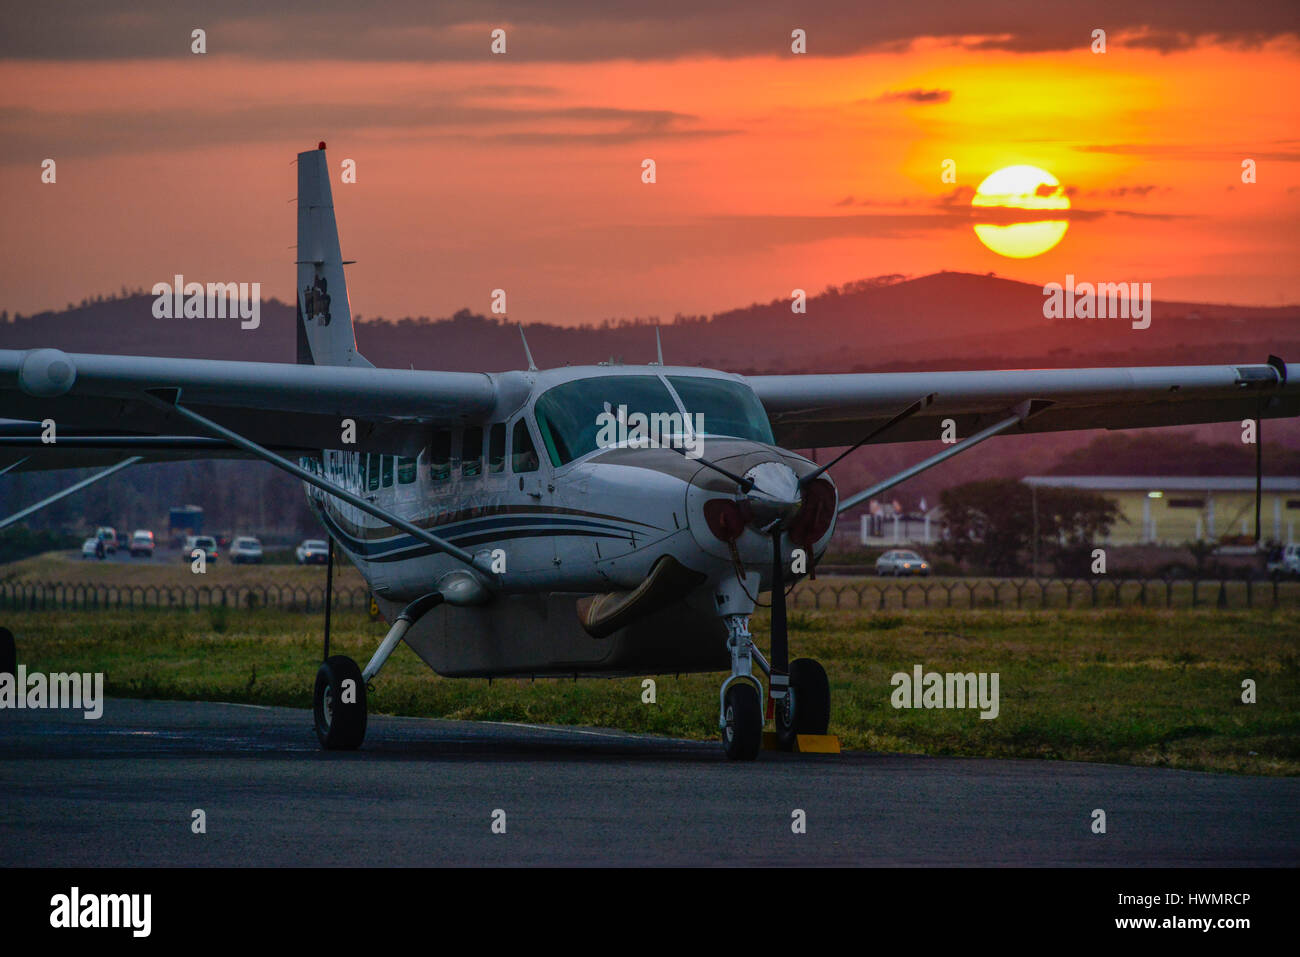 The sun sets behind a Cessna 208 Caravan aircraft at Arusha airport in Tanzania, Africa. Stock Photo